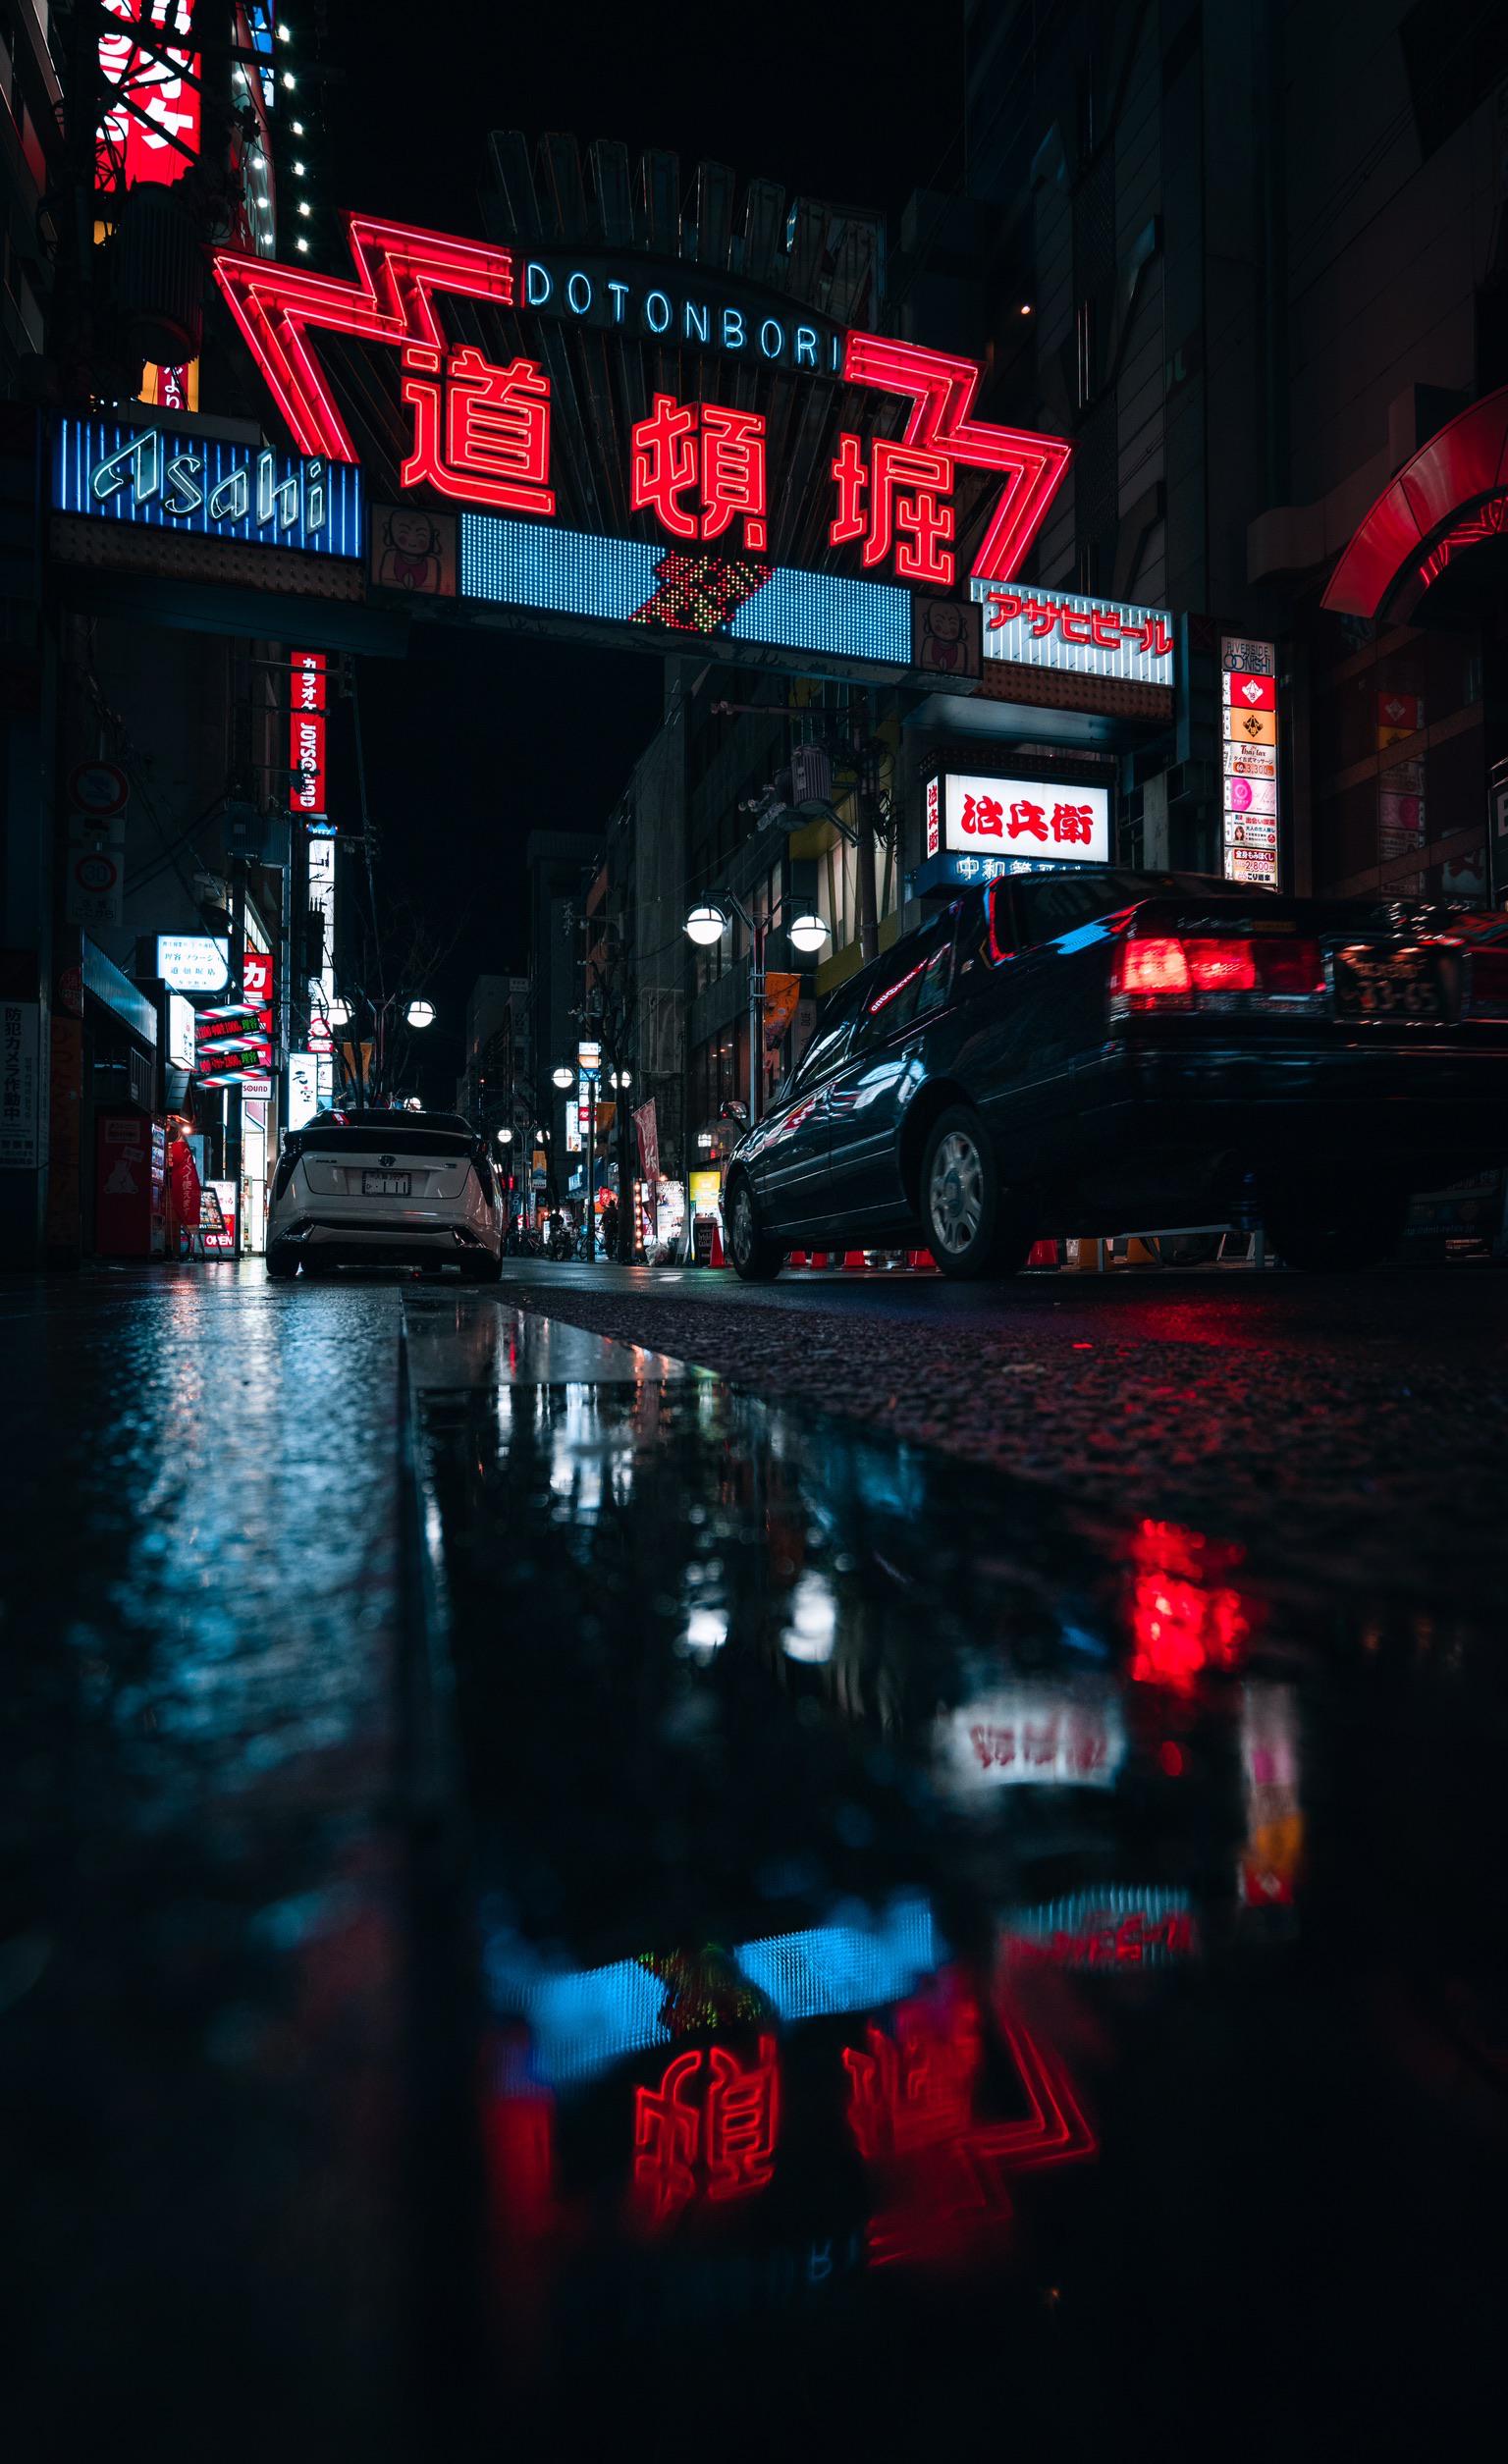 Night Shot in Japan, the best photo I've ever taken